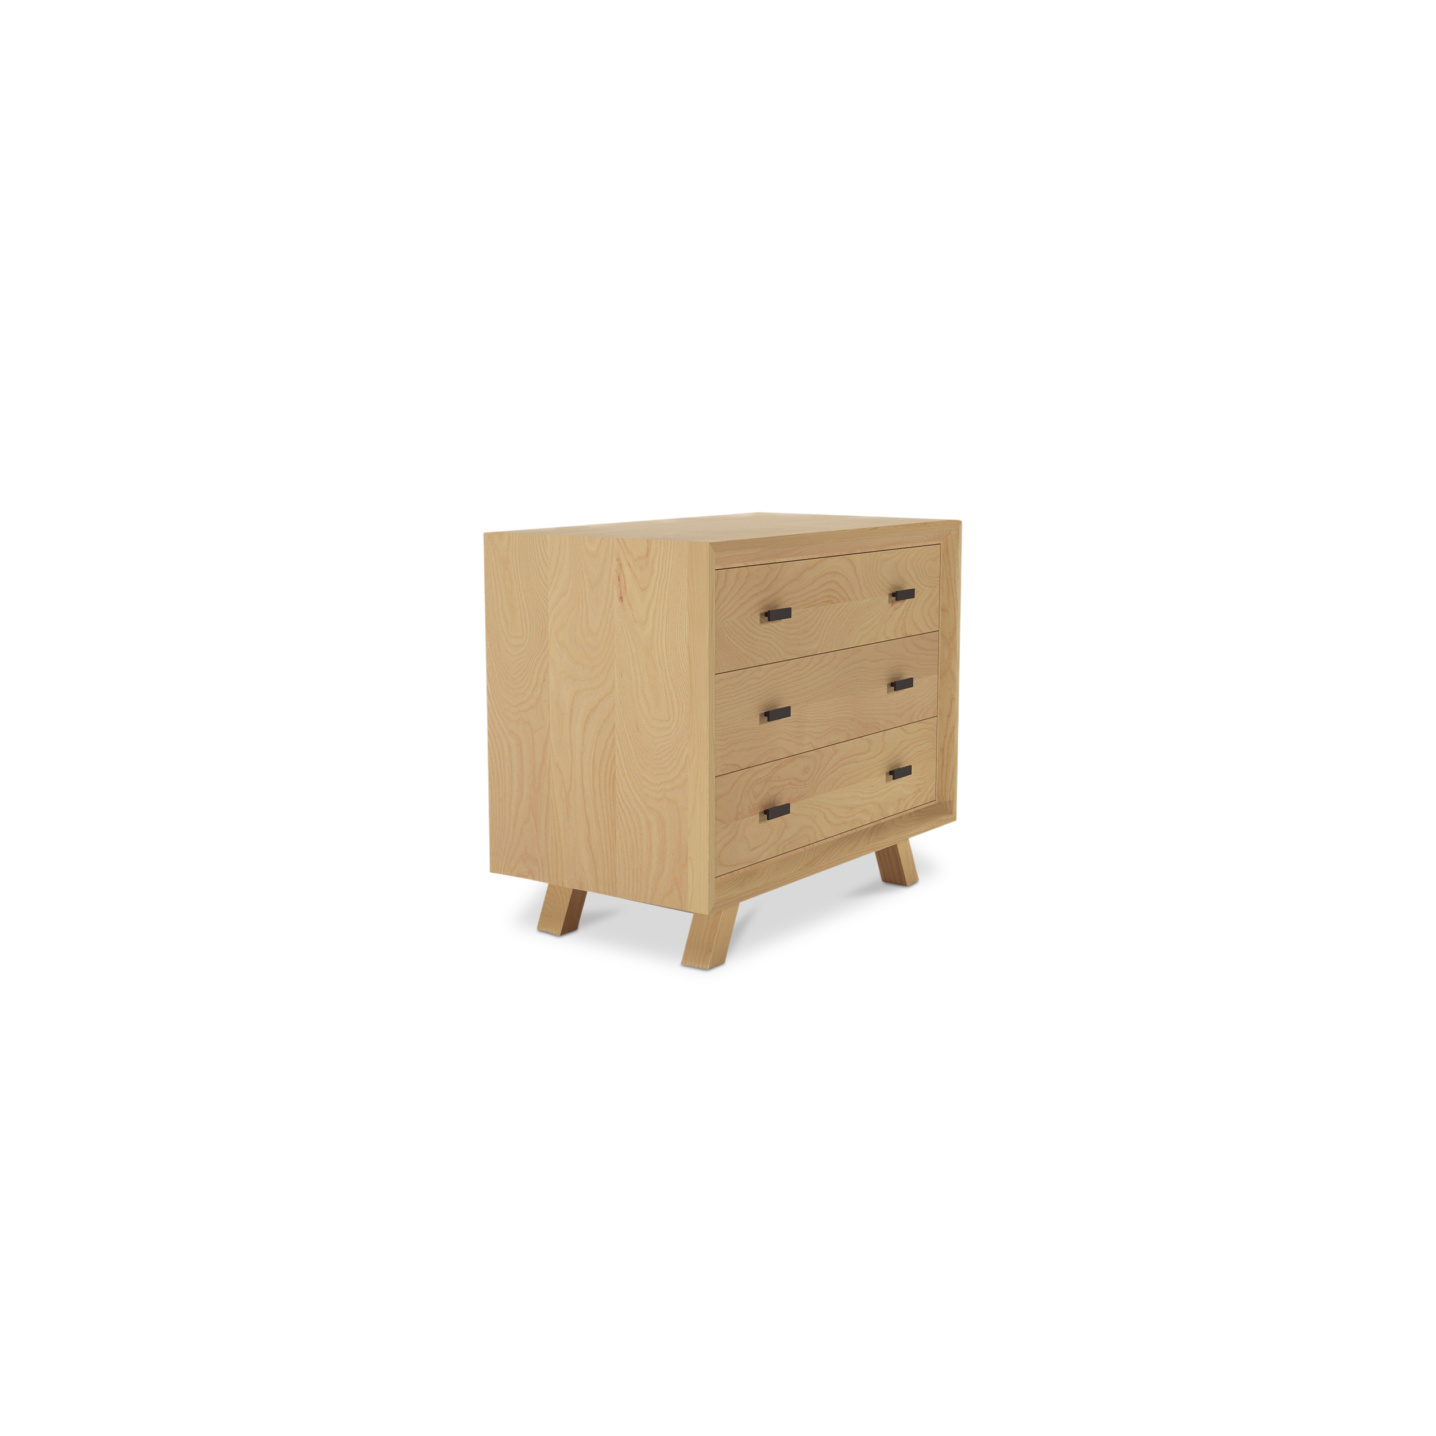 Danish solid ash 3 drawer dresser